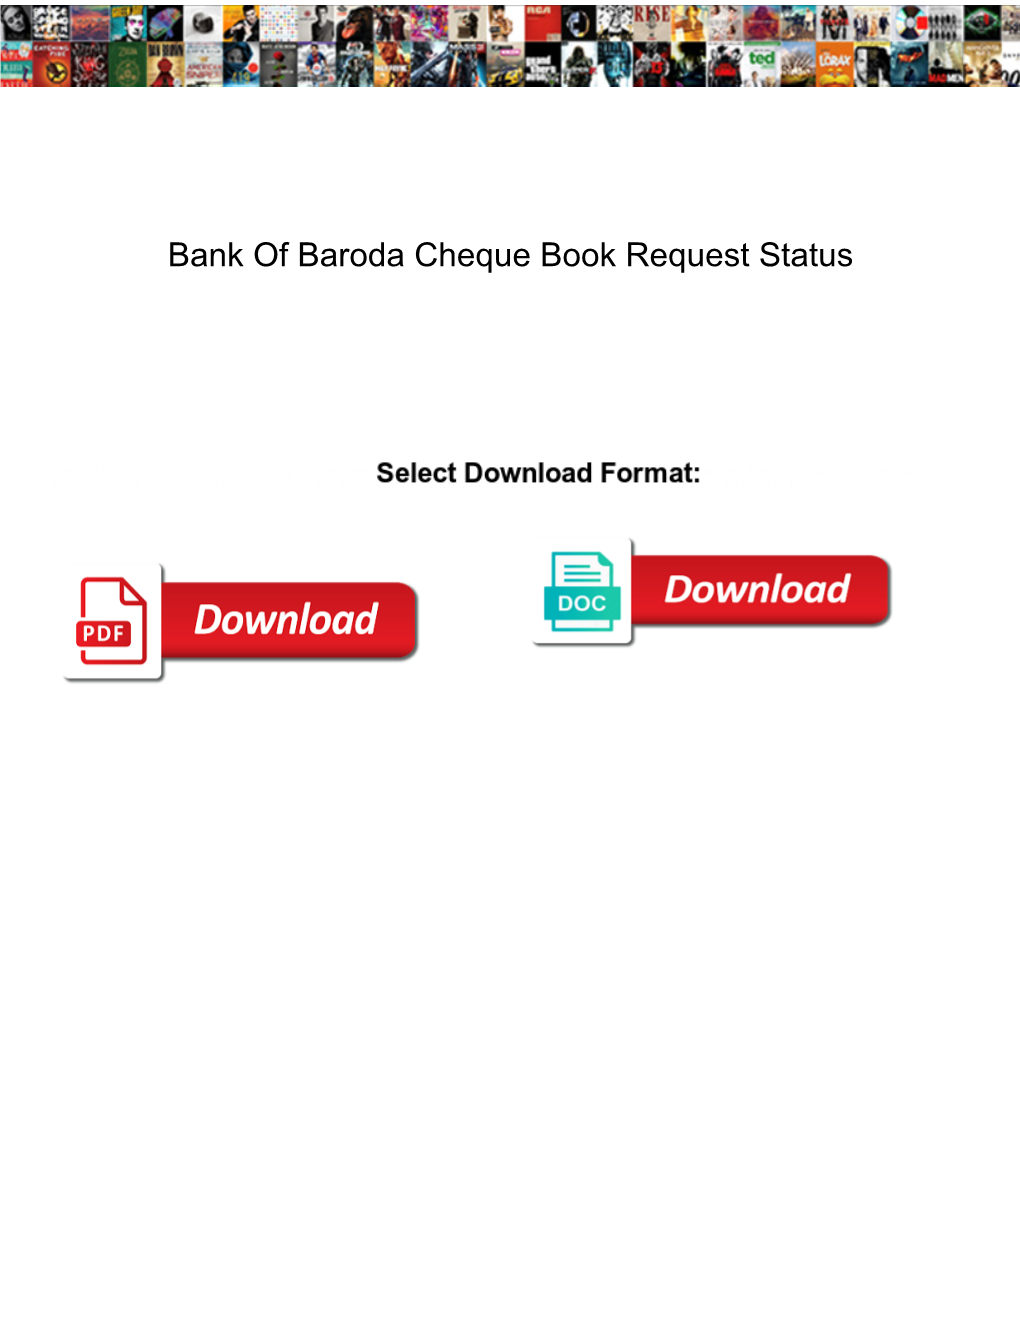 Bank of Baroda Cheque Book Request Status